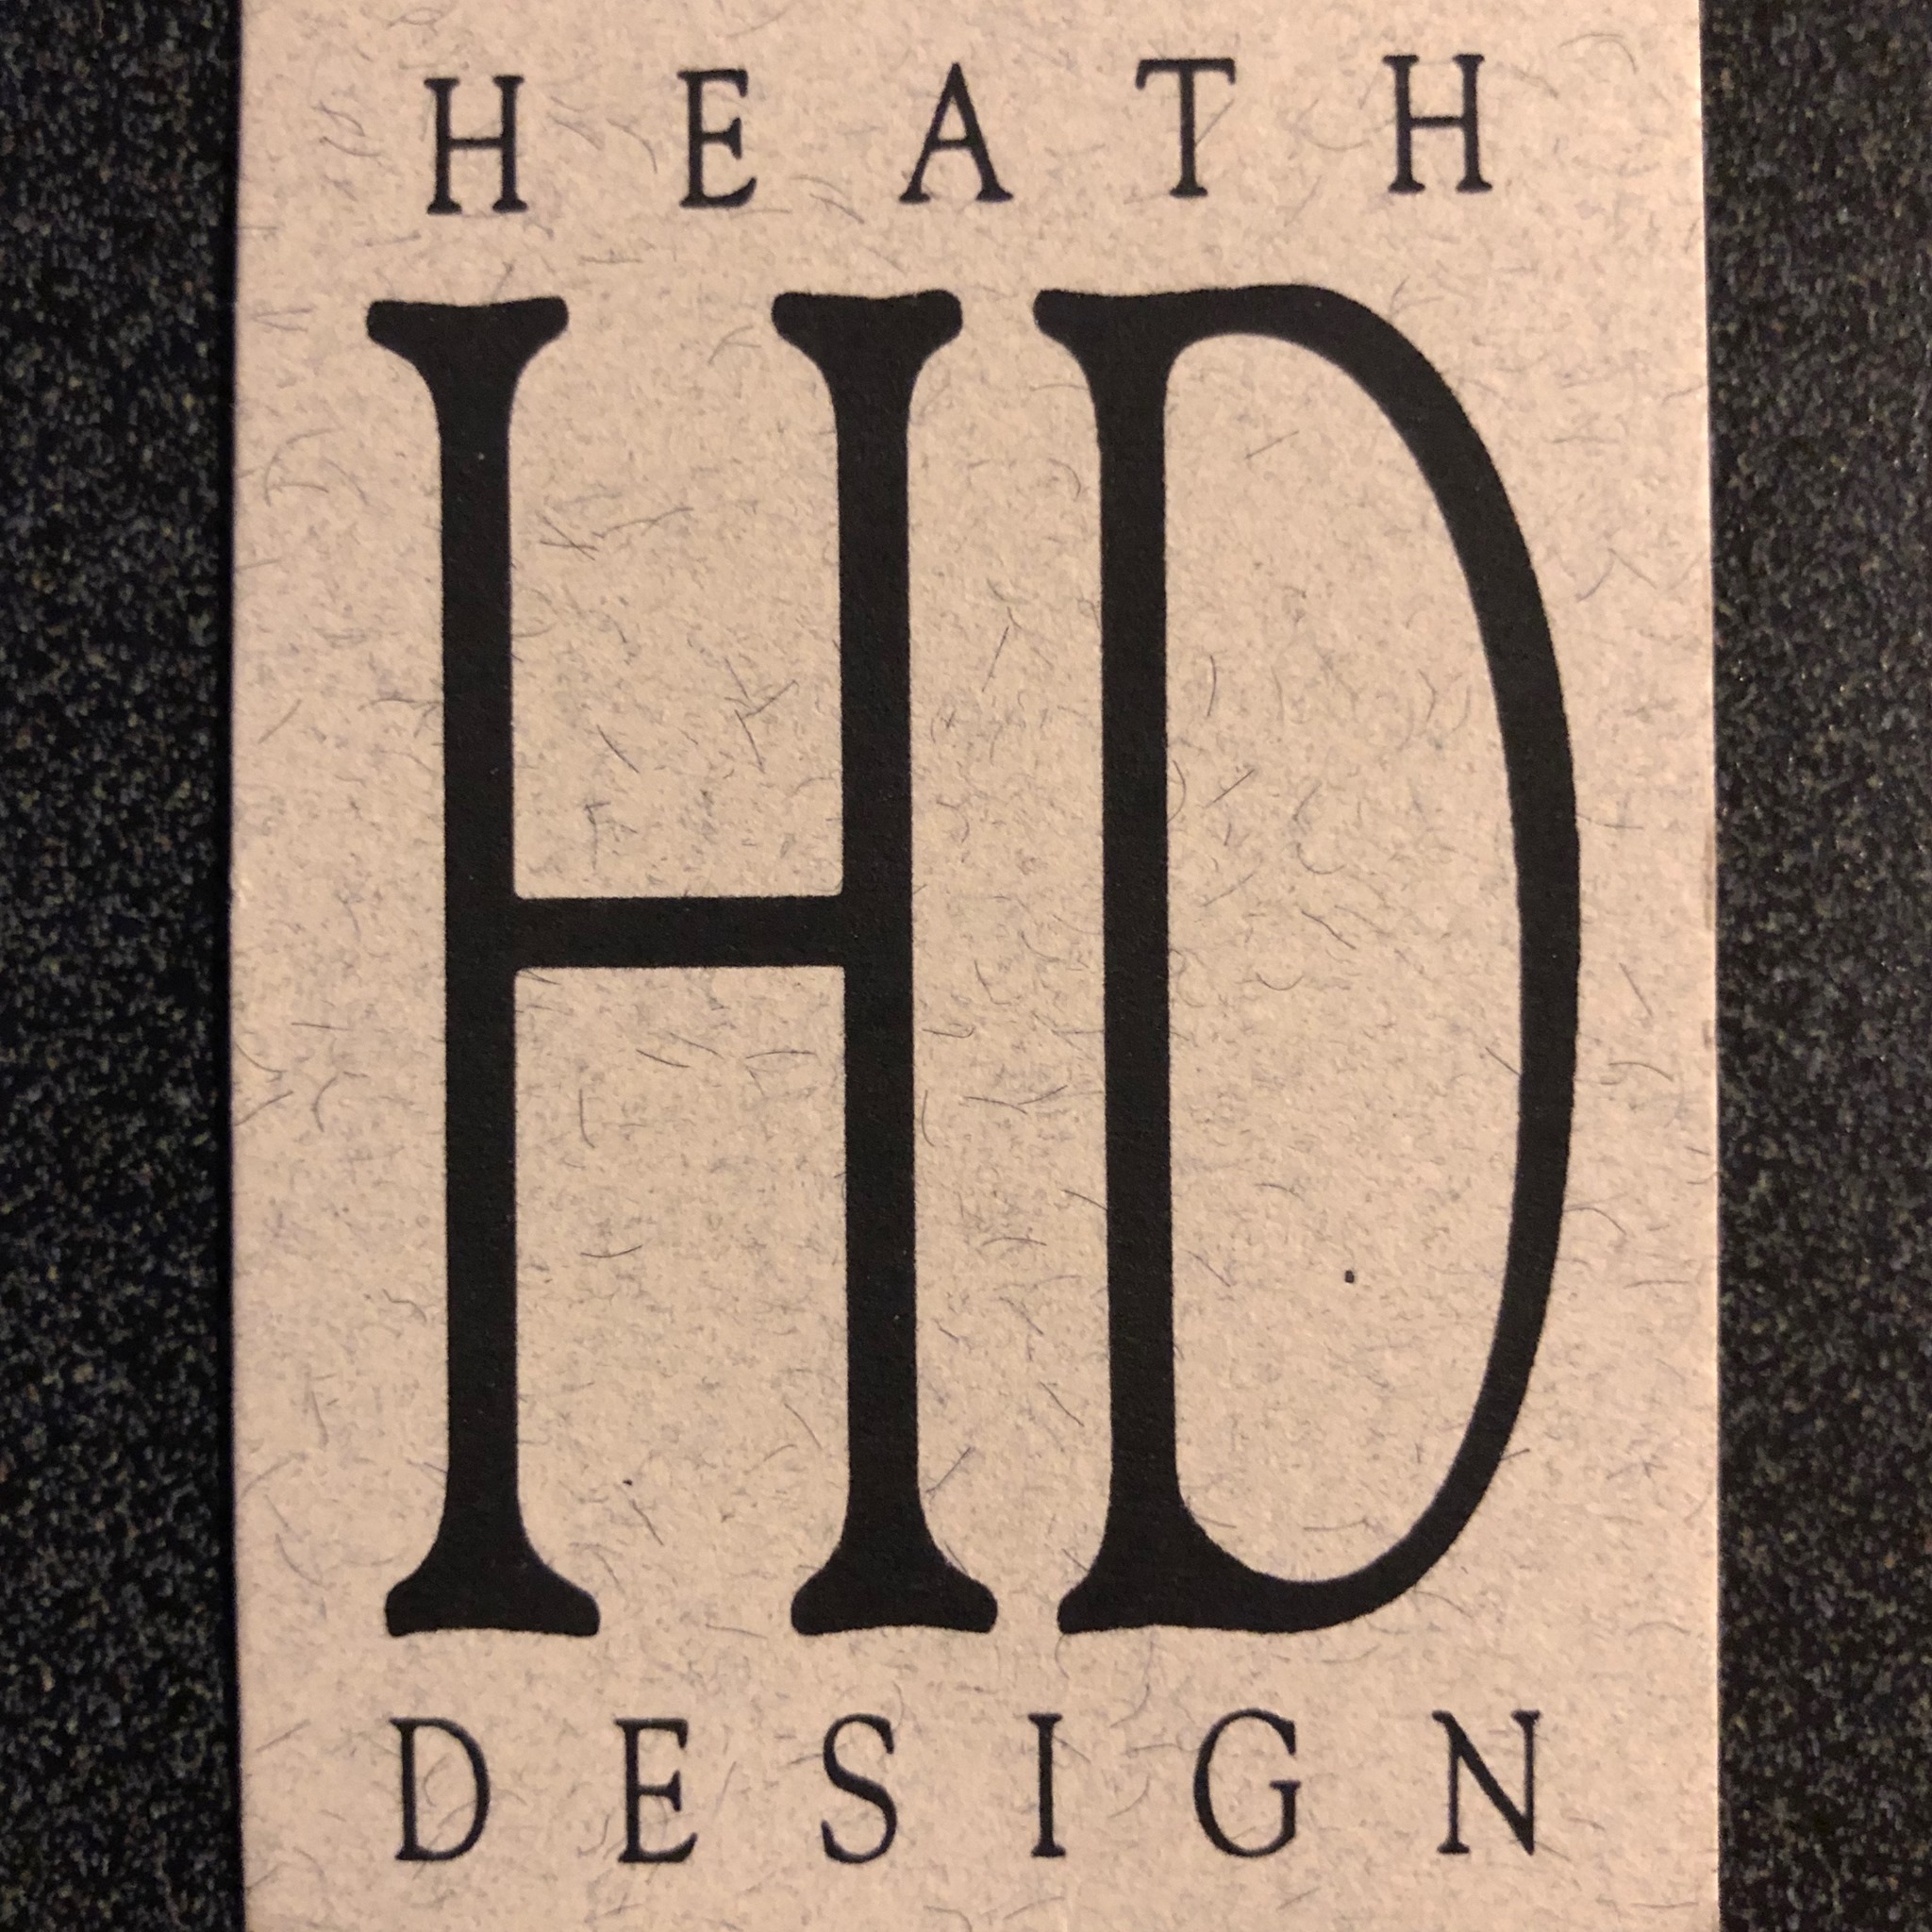 HD Heath Design (Seattle, WA)